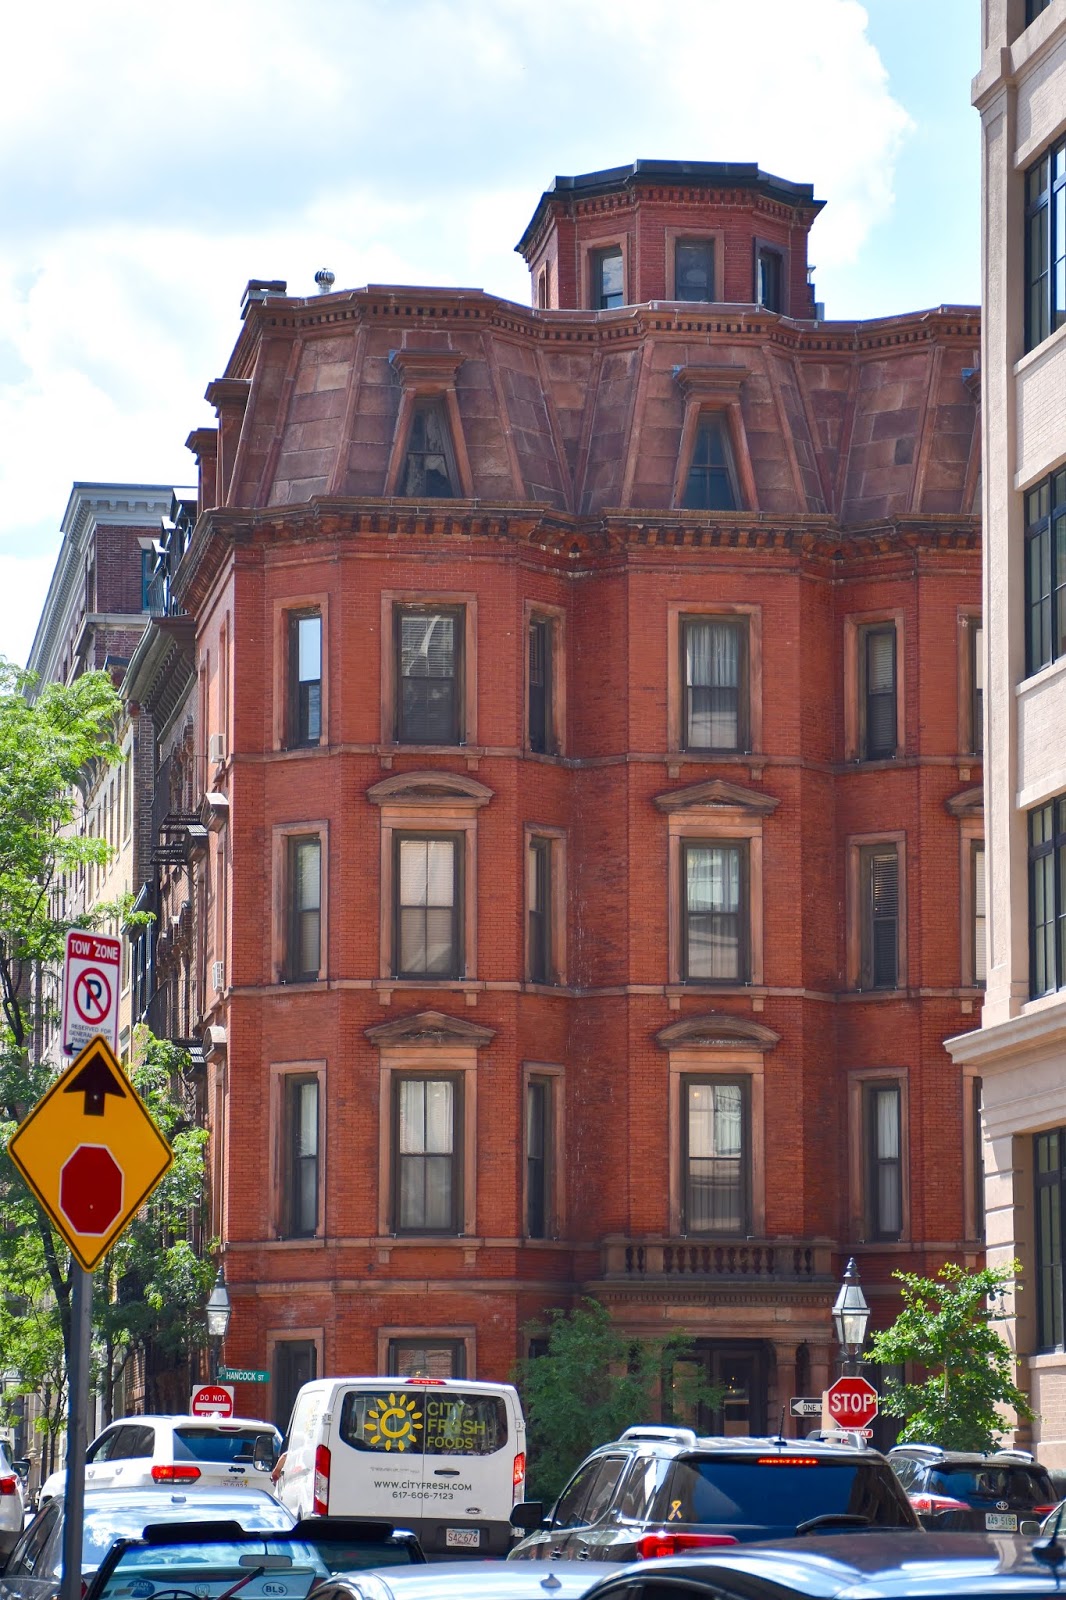 File:Louisburg Square Beacon Hill Boston Massachusetts.jpg - Wikipedia